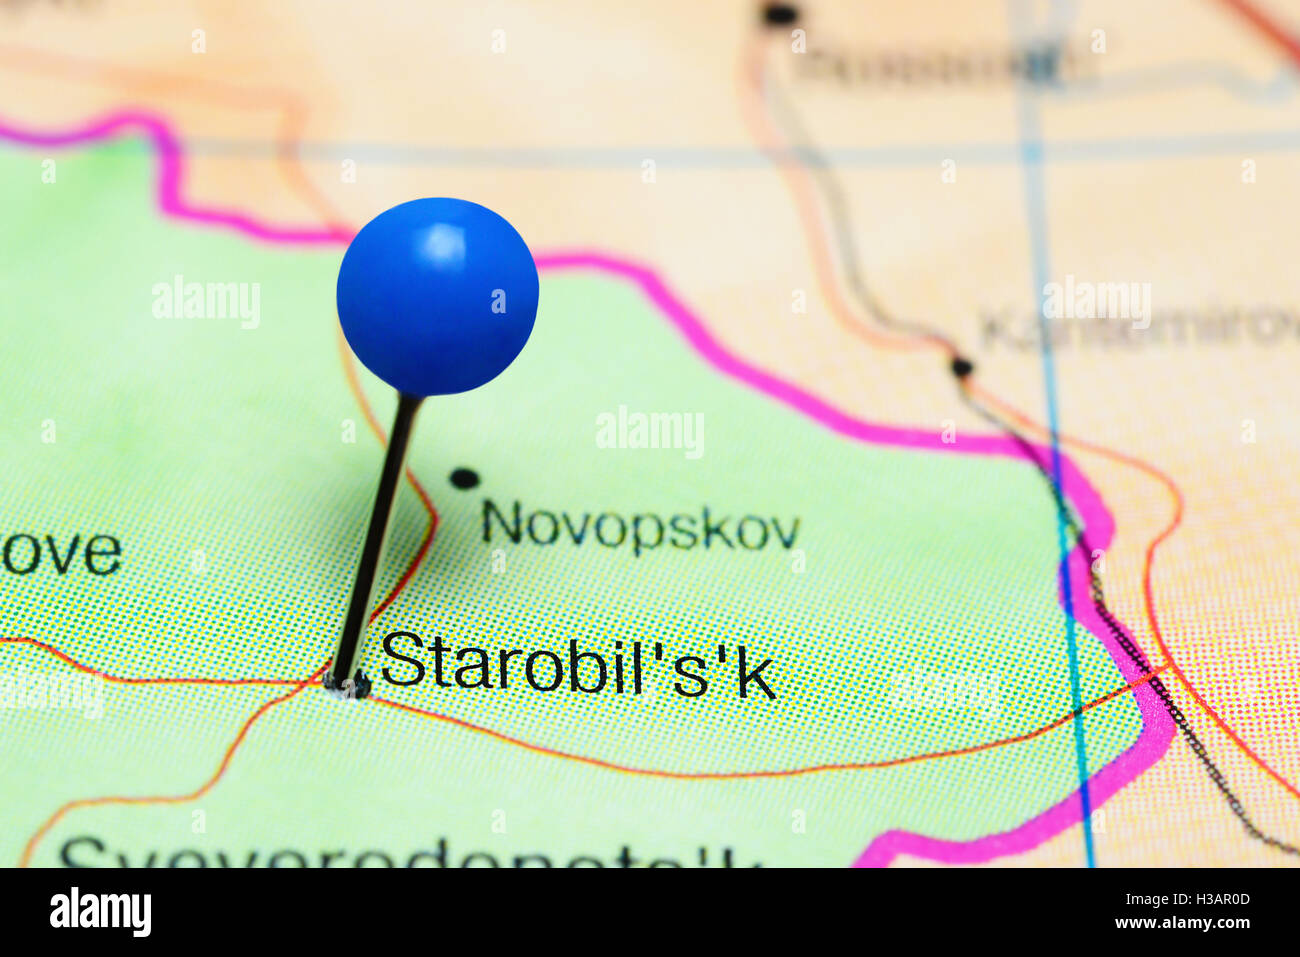 Starobilsk pinned on a map of Ukraine Stock Photo